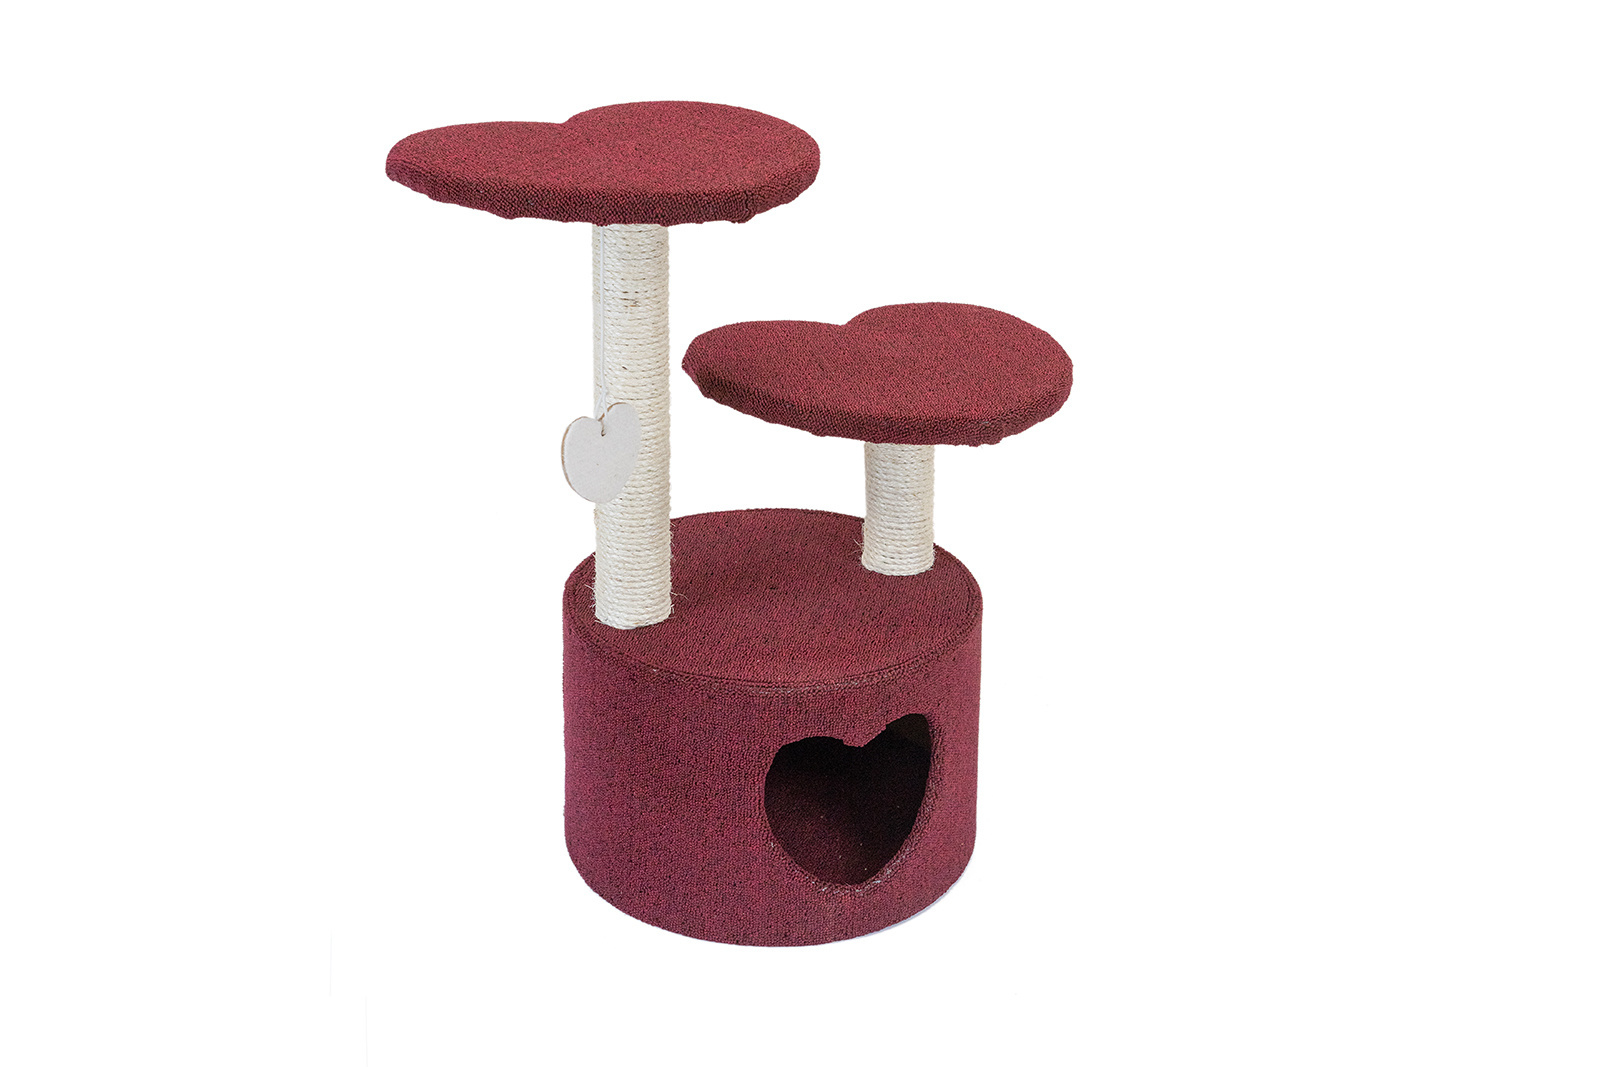 Tappi когтеточки Tappi когтеточки домик-когтеточка Меган, сизаль, бордовый (39×39×73,5 cм) иванко когтеточка домик круглый со ступенькой сизаль 40х40х80 см